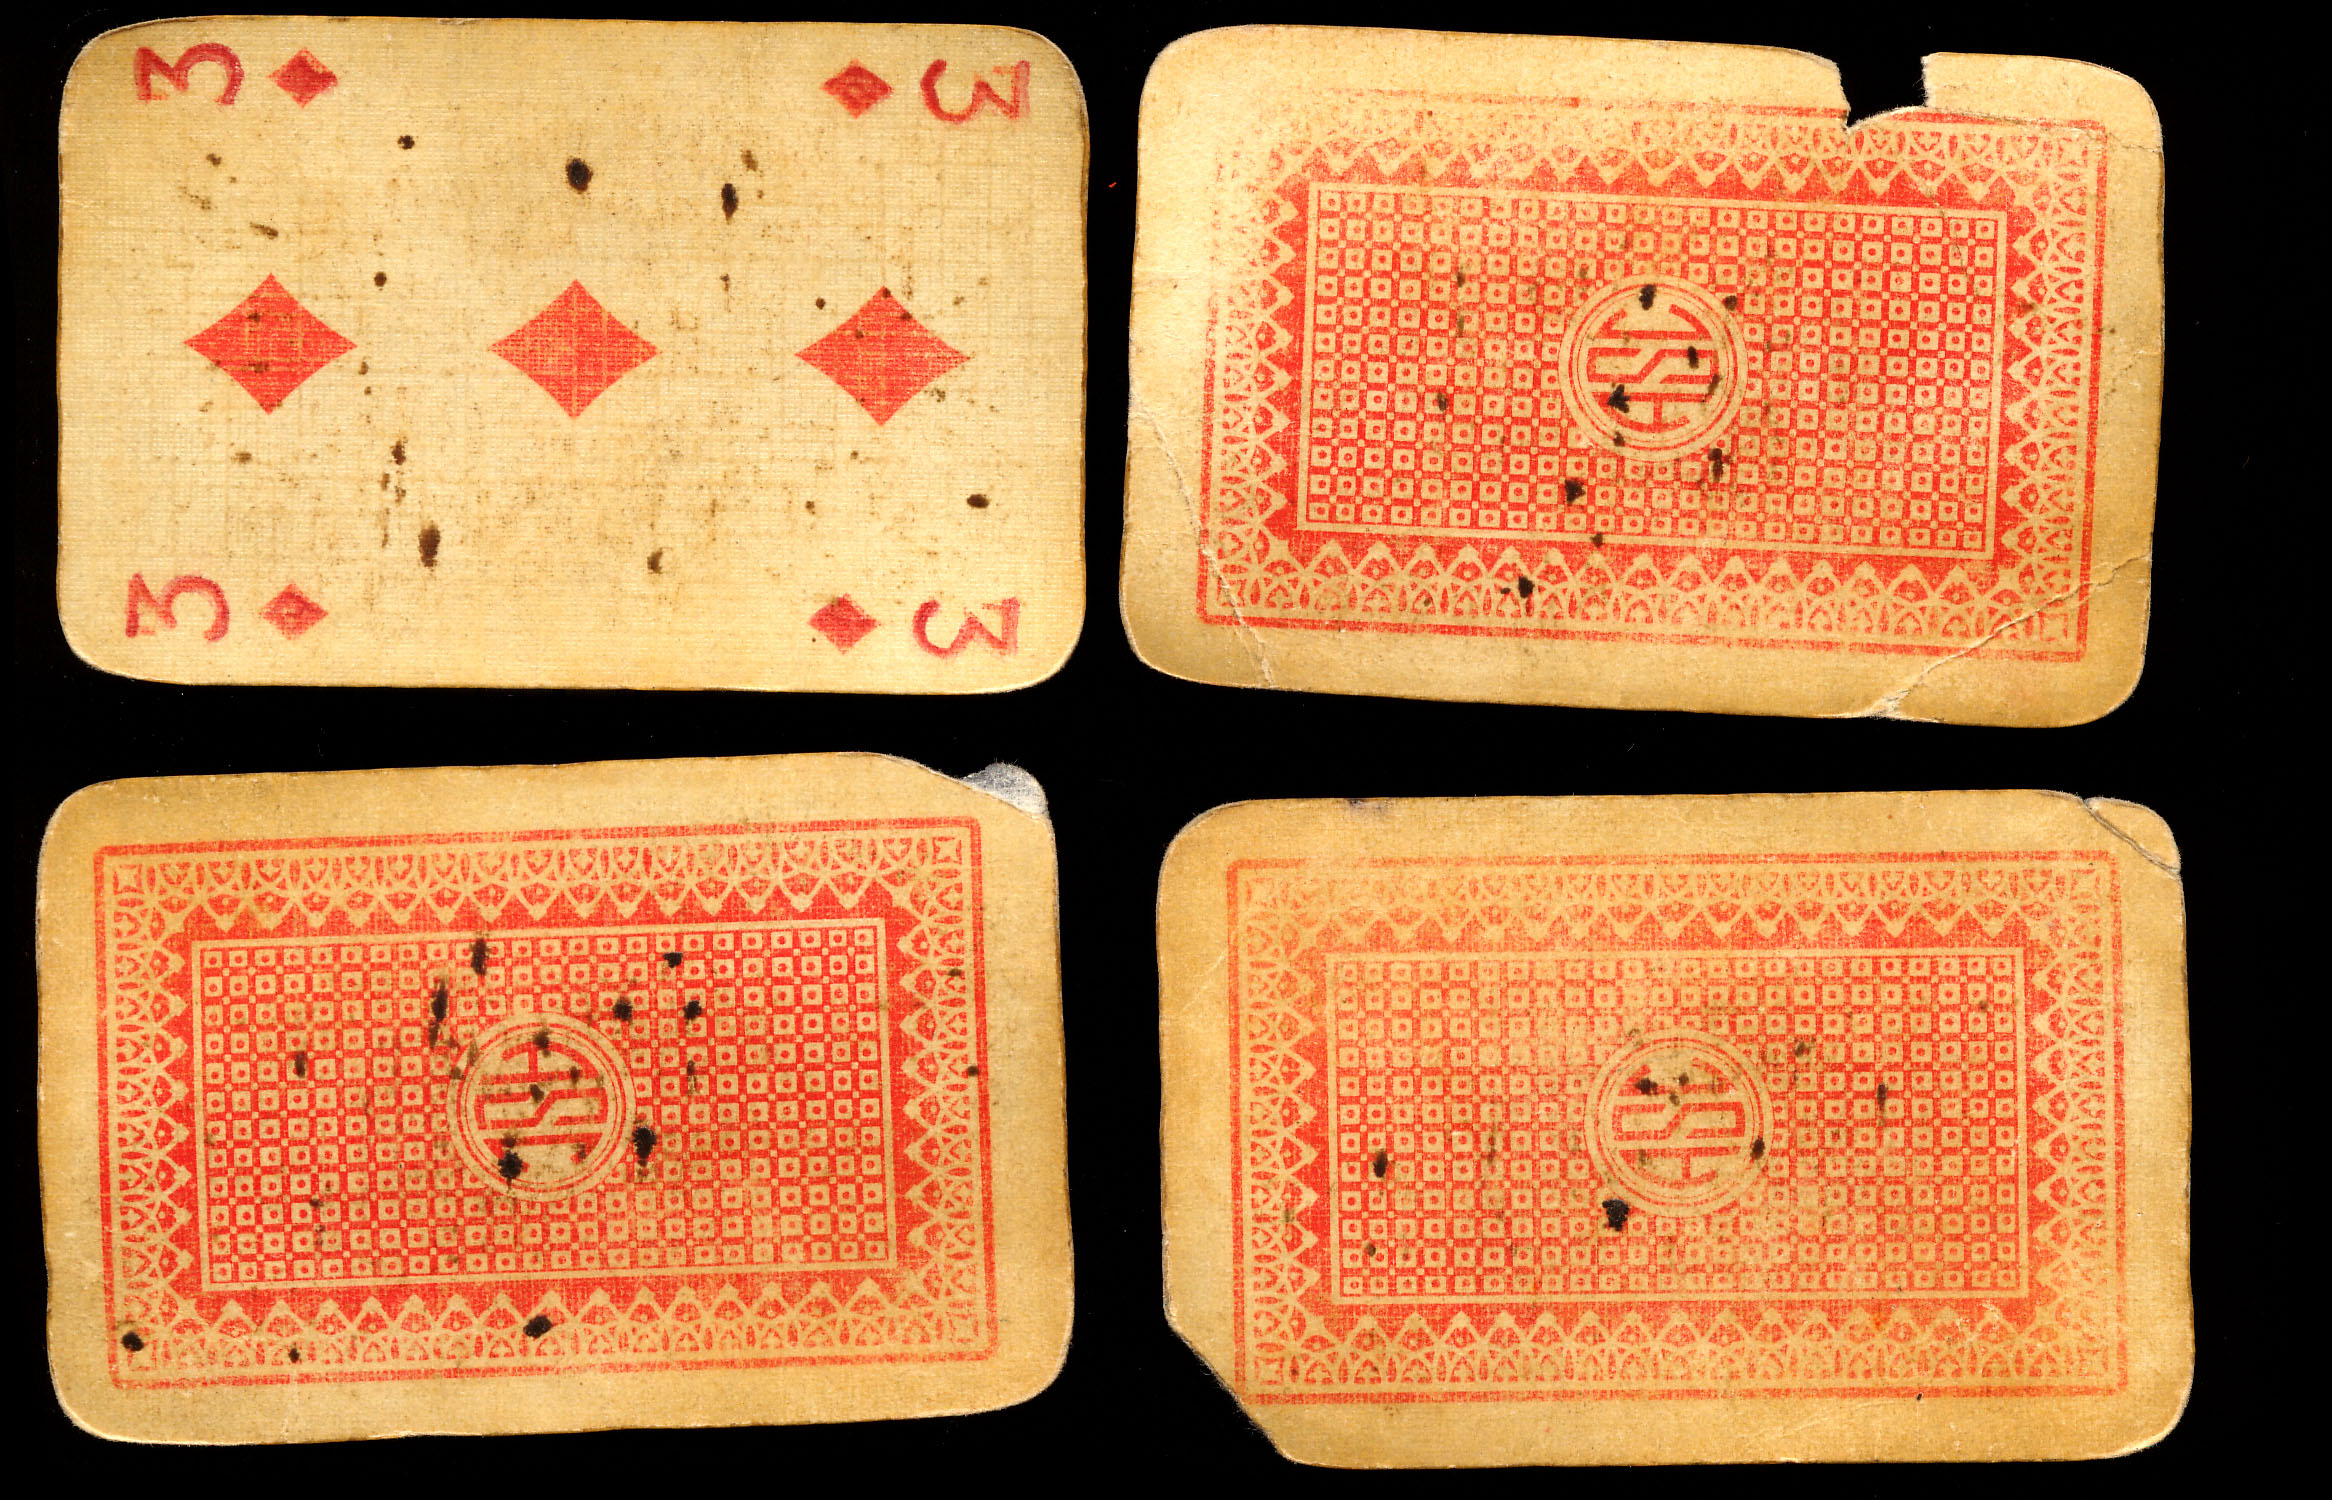 themabina card cards old three 3 of diamond diamonds back front poker